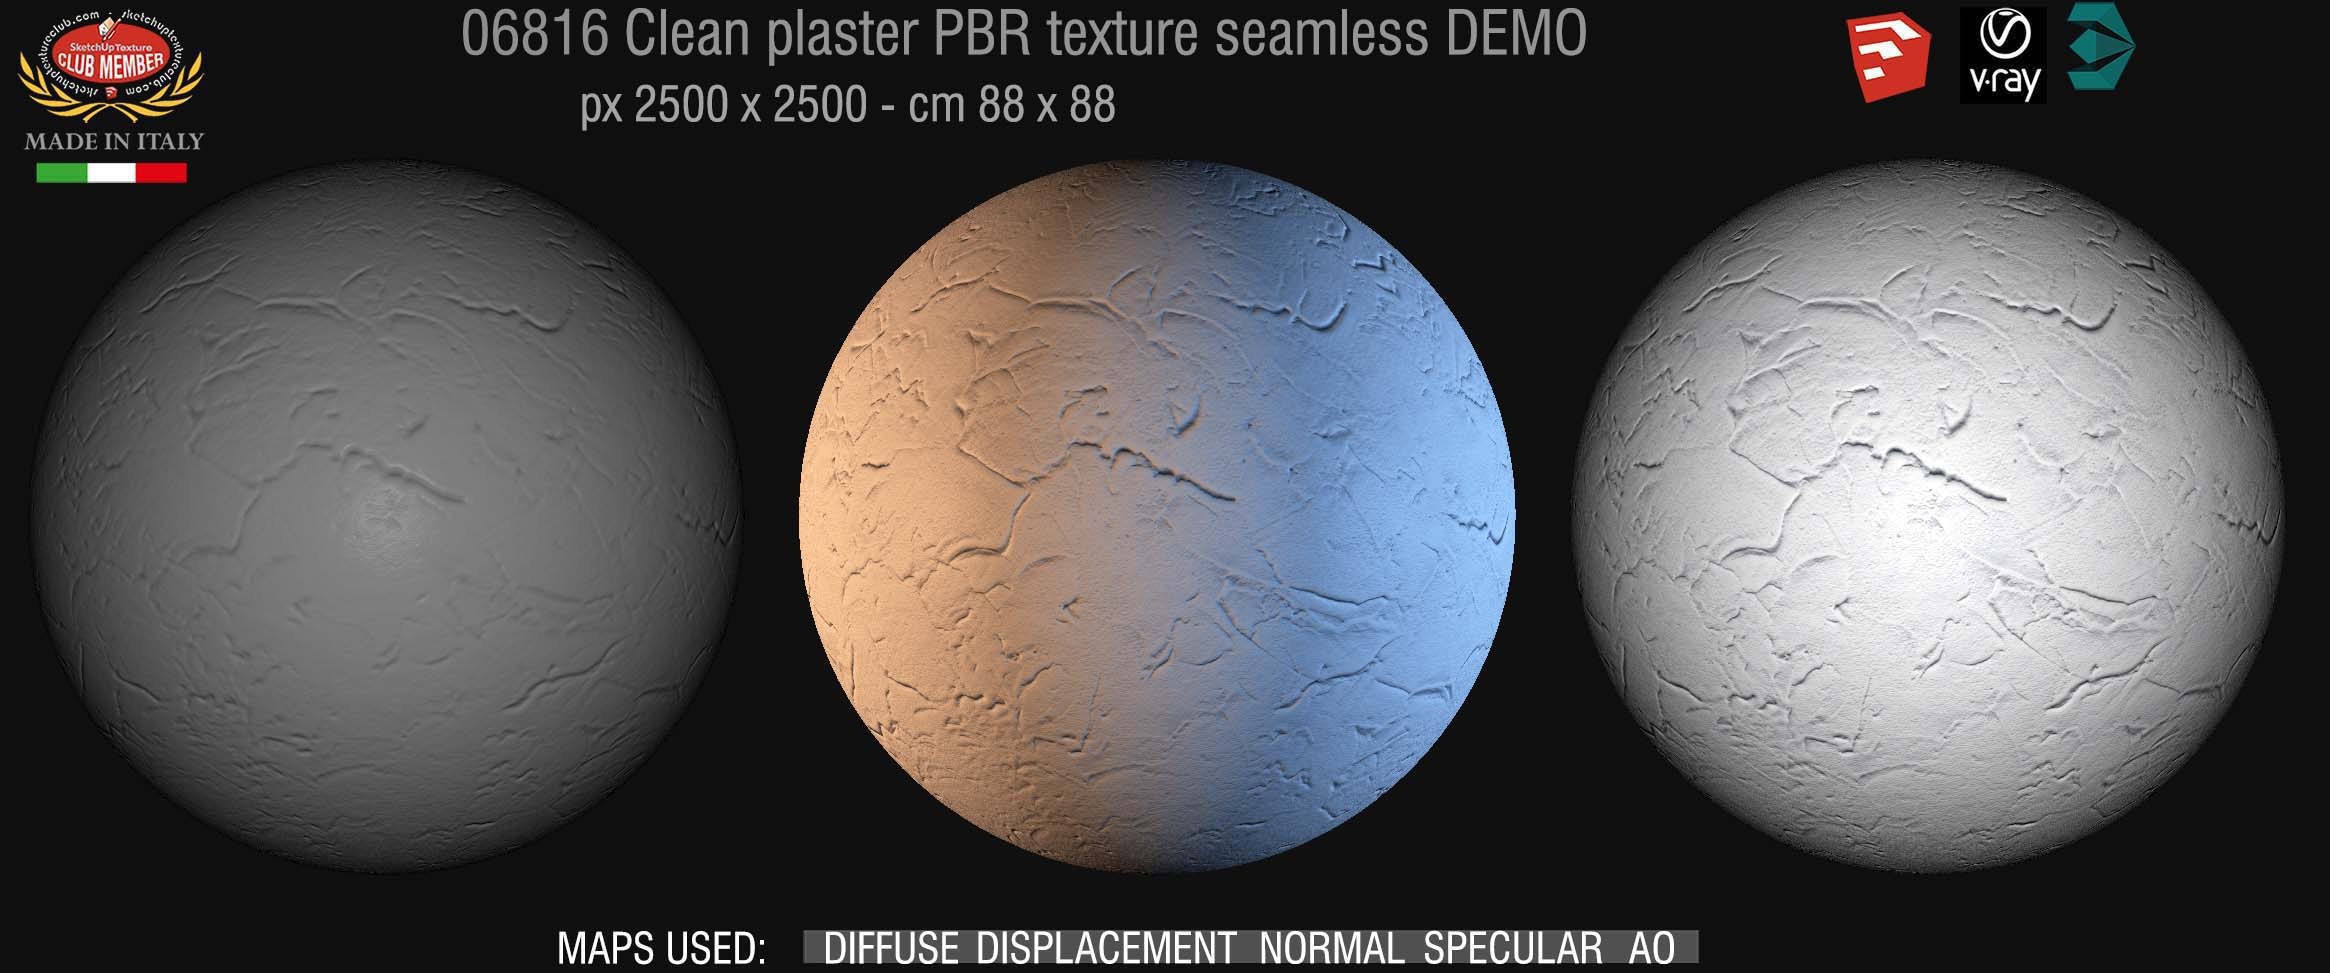 06816 Clean plaster PBR texture seamless DEMO